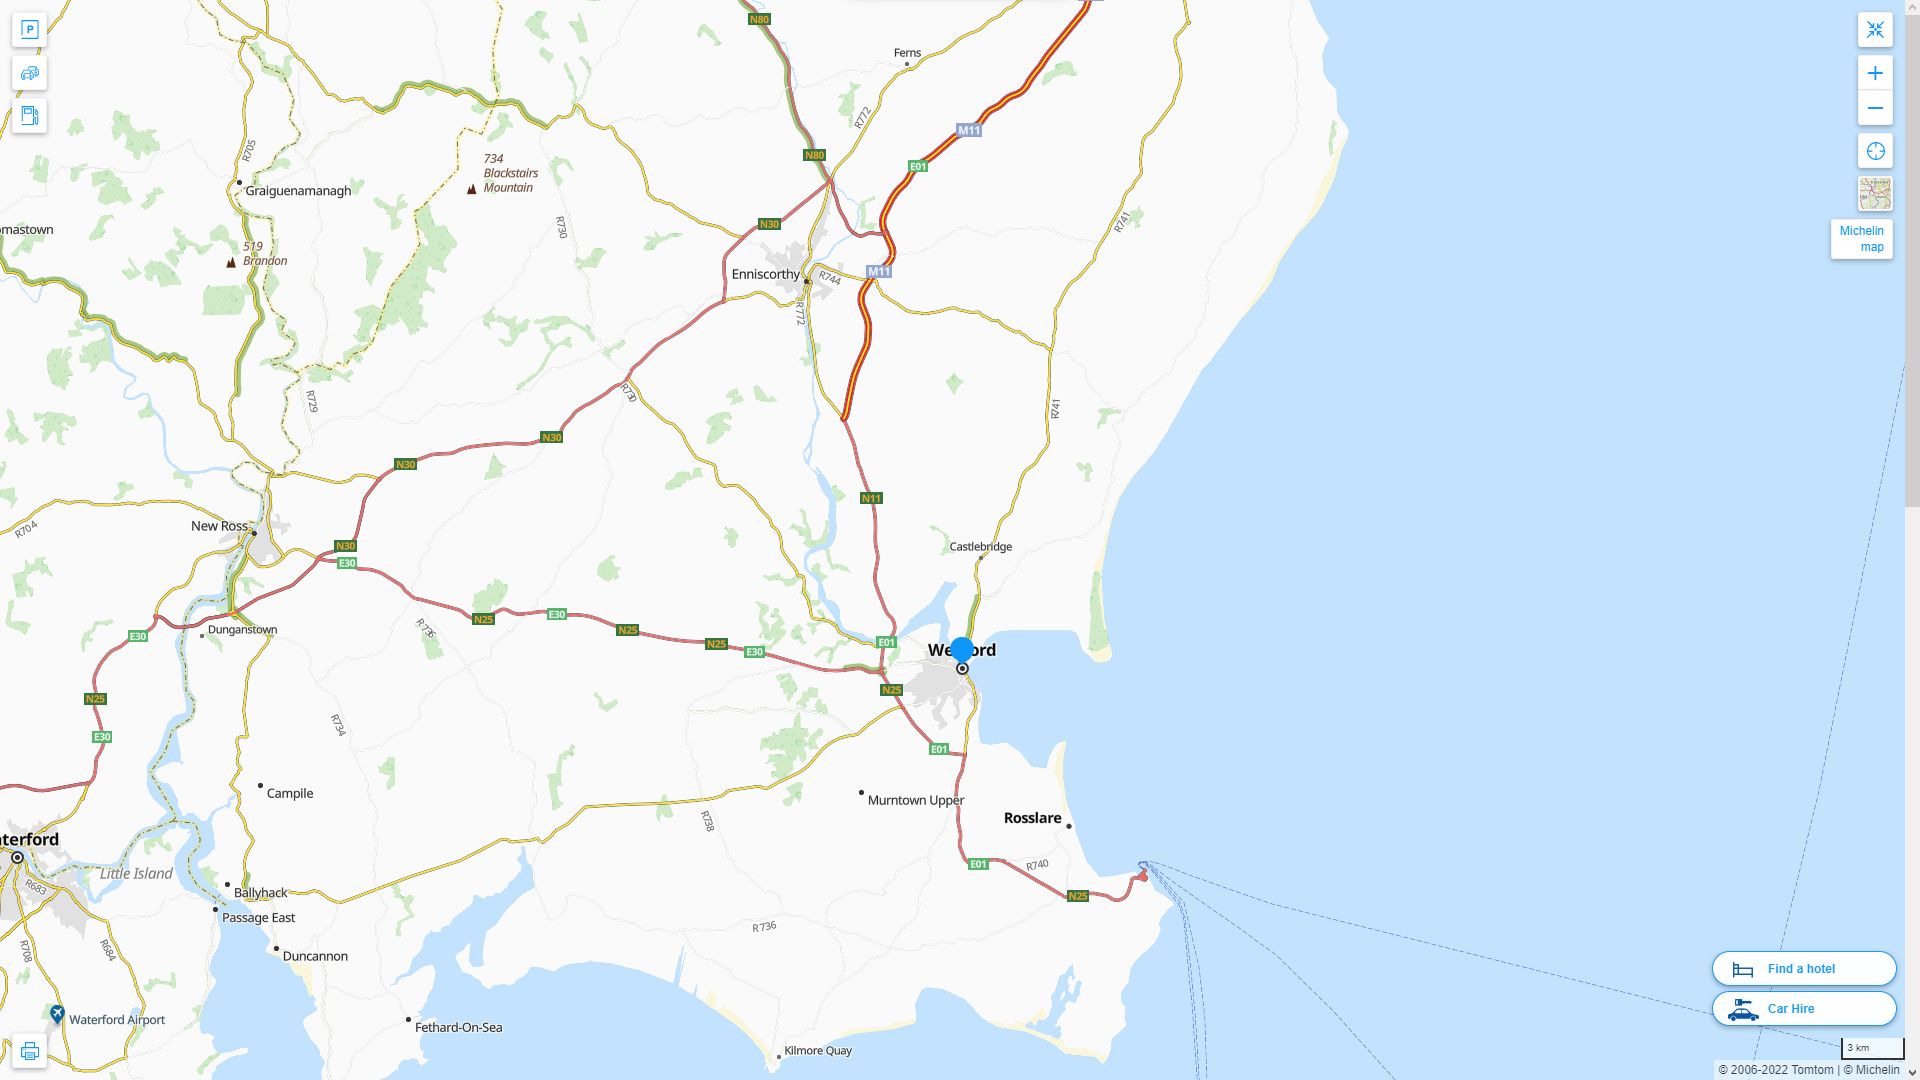 Wexford Irlande Autoroute et carte routiere